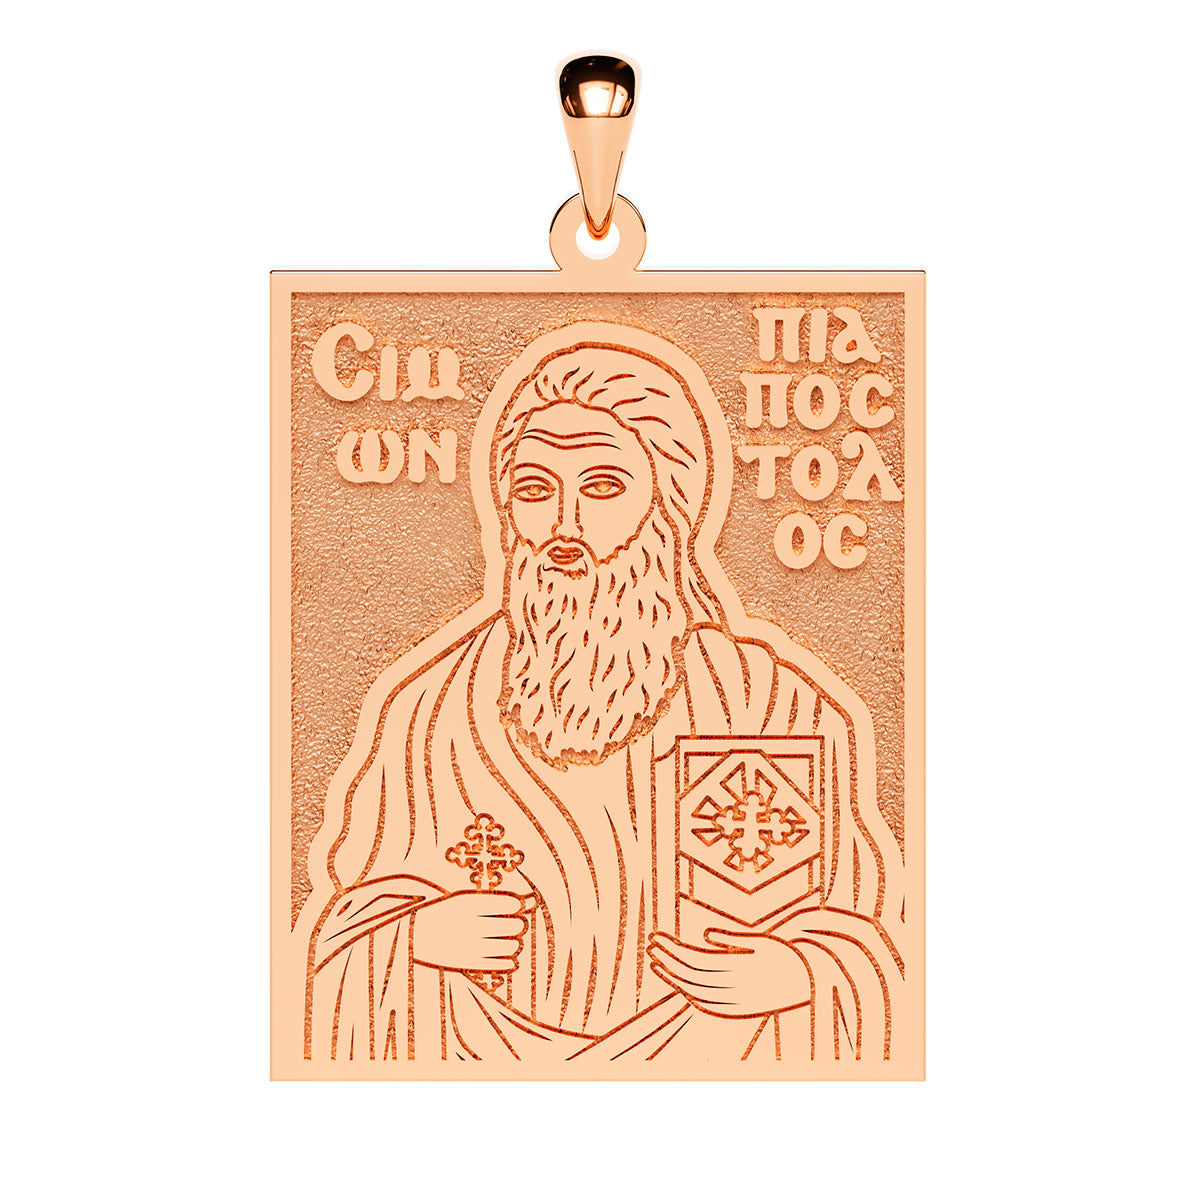 Saint Simon the Tanner Coptic Orthodox Icon Tag Medal